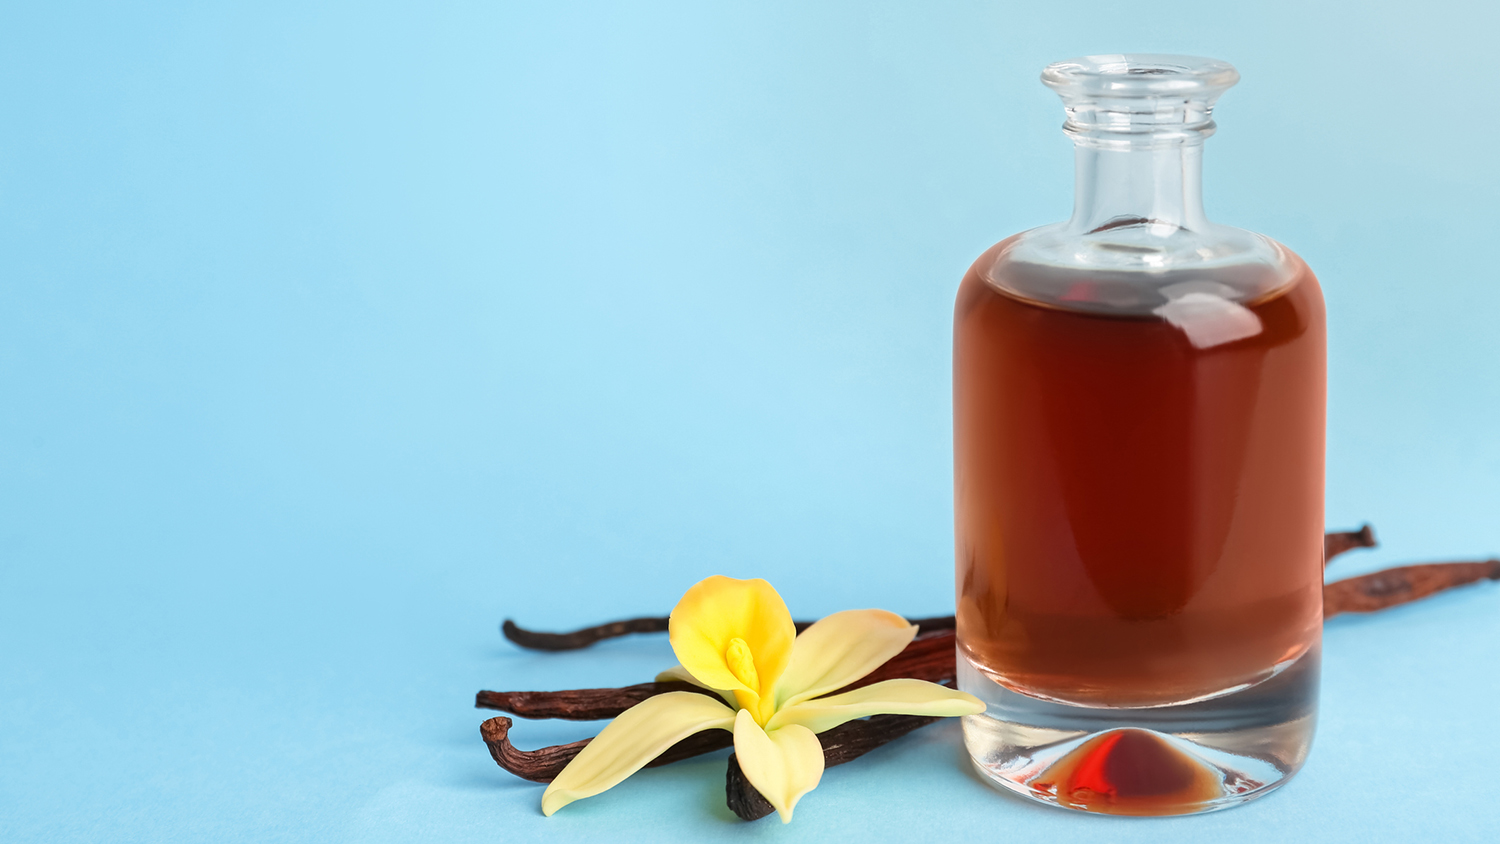 Vanilla Essential Oil in Skin Nourishing Base